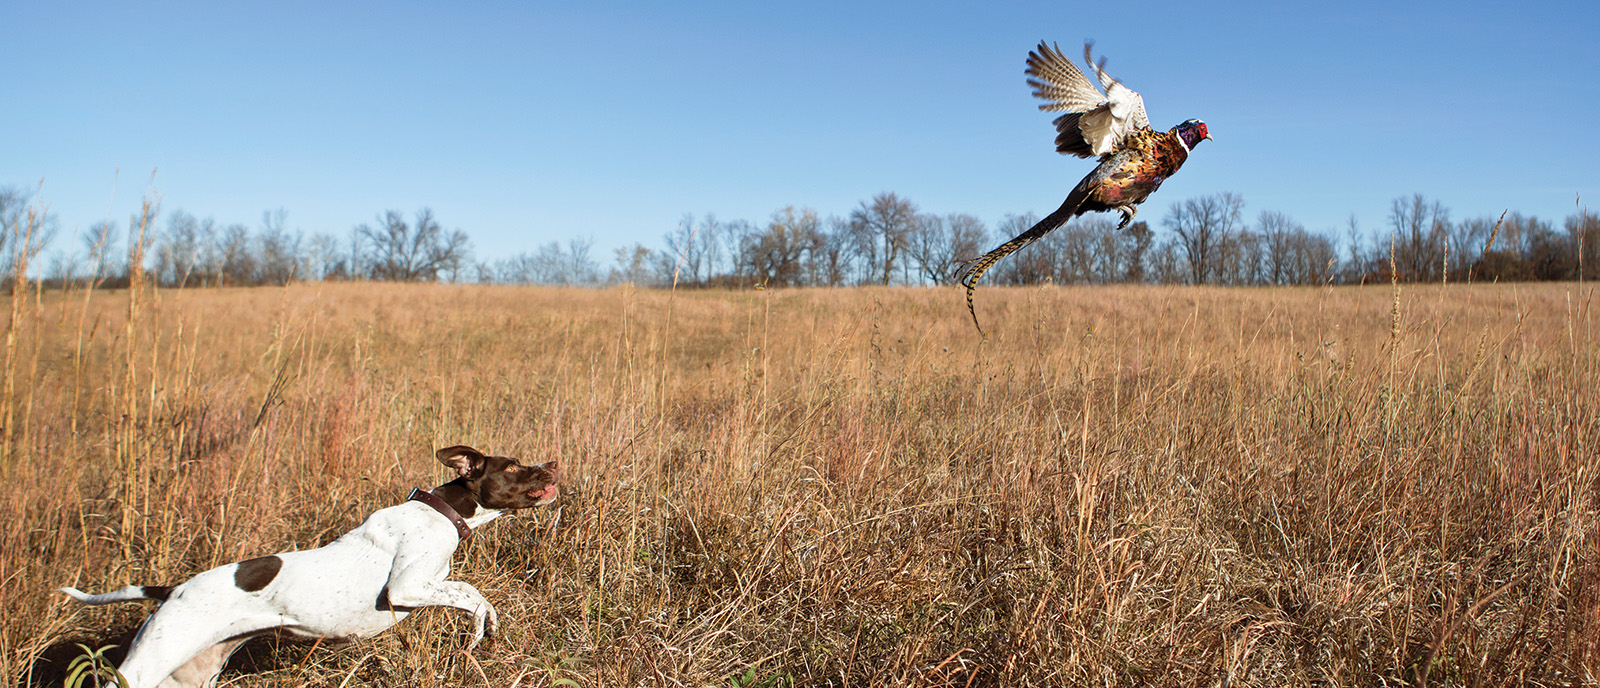 A dog chasing a pheasant